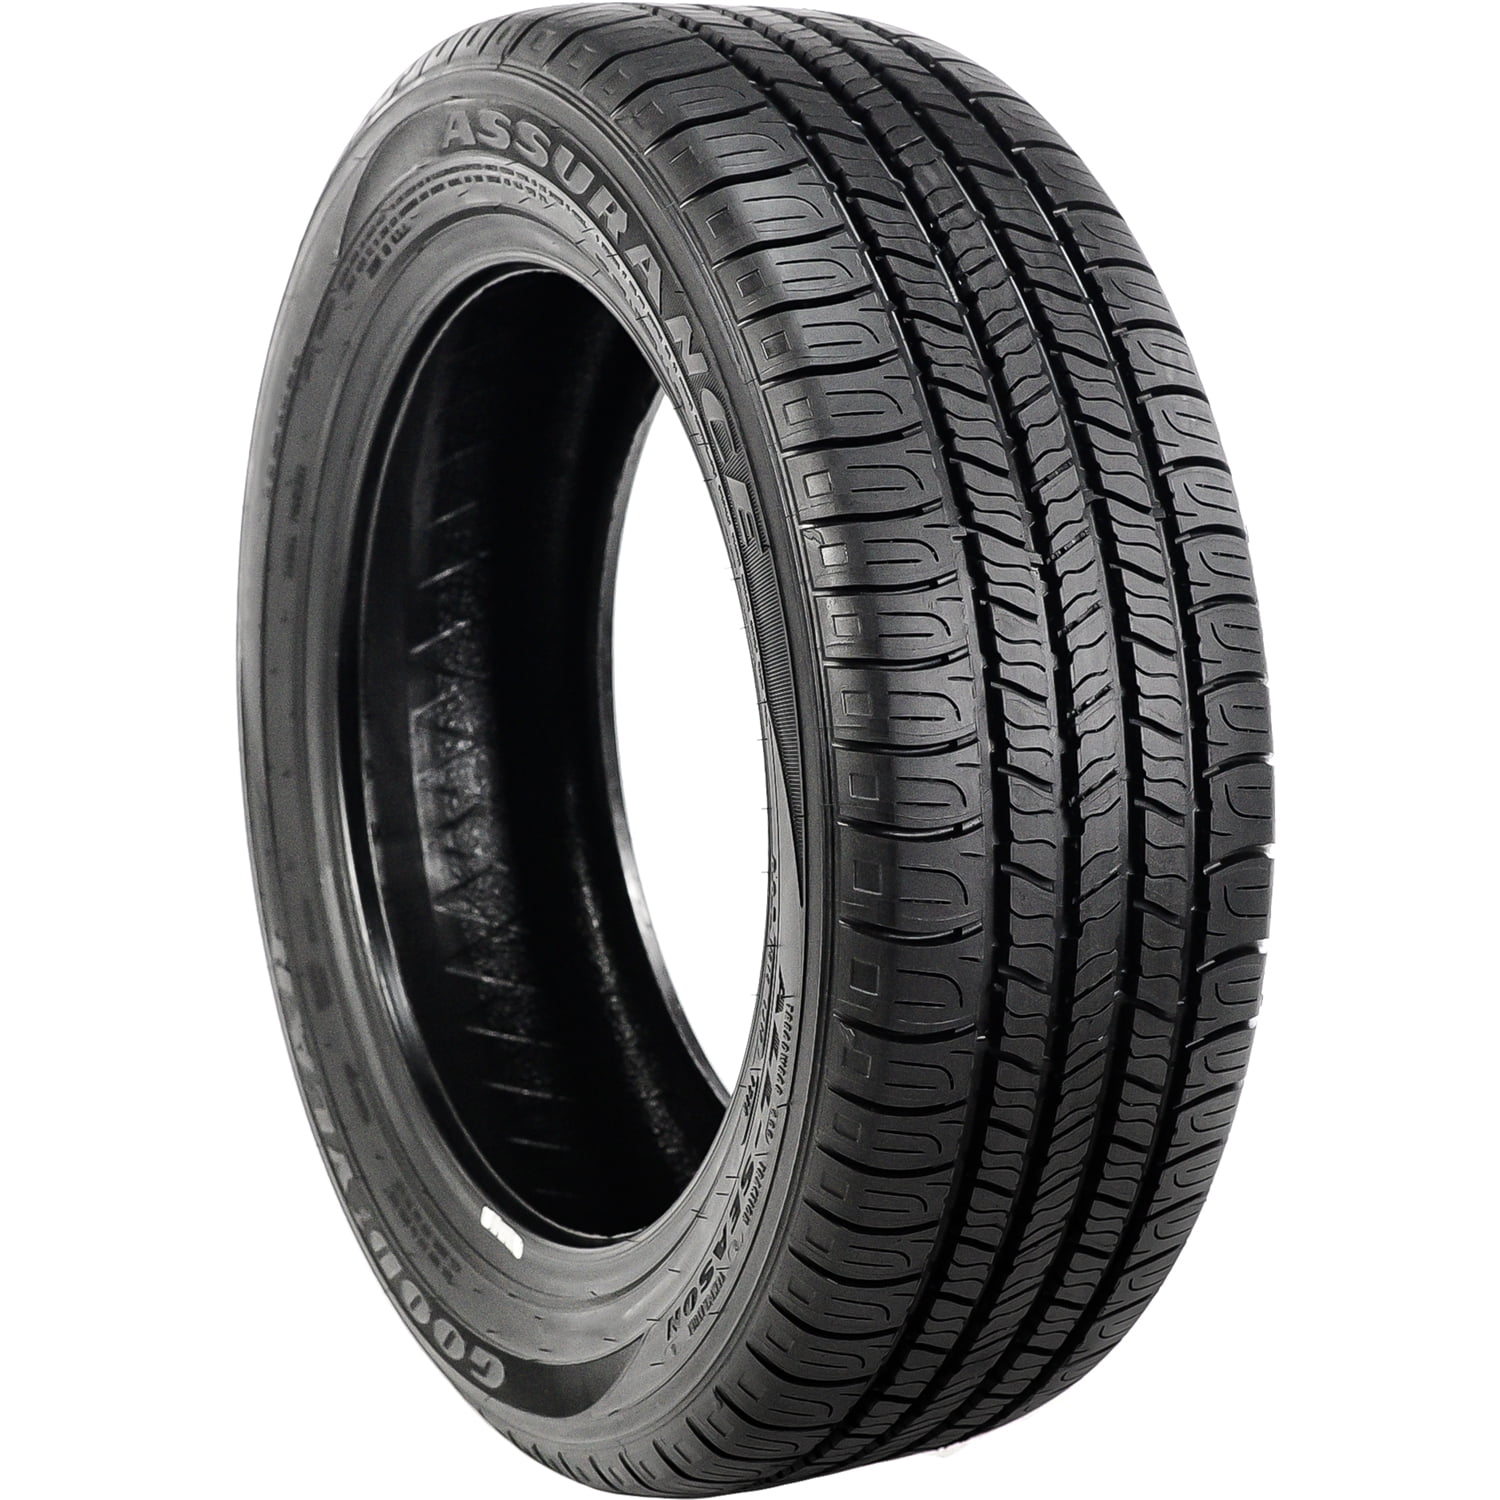 Goodyear Assurance All-Season 225/60R16 98 T Tire